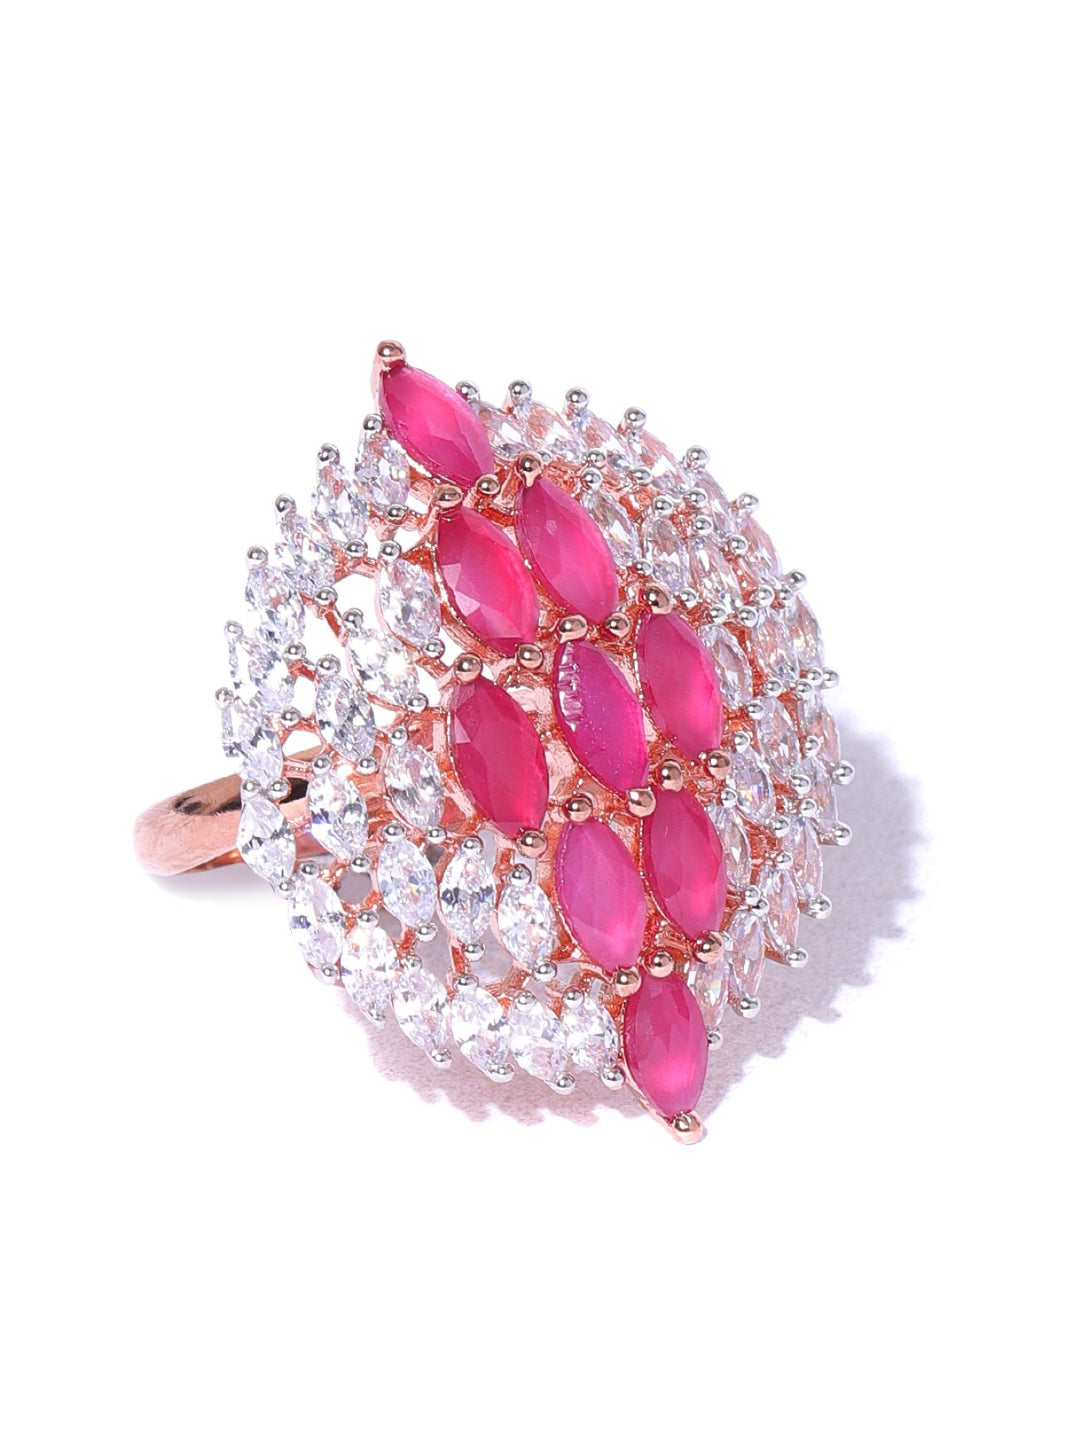 Rose Gold-Plated Pink CZ Stone-Studded Adjustable Finger Ring